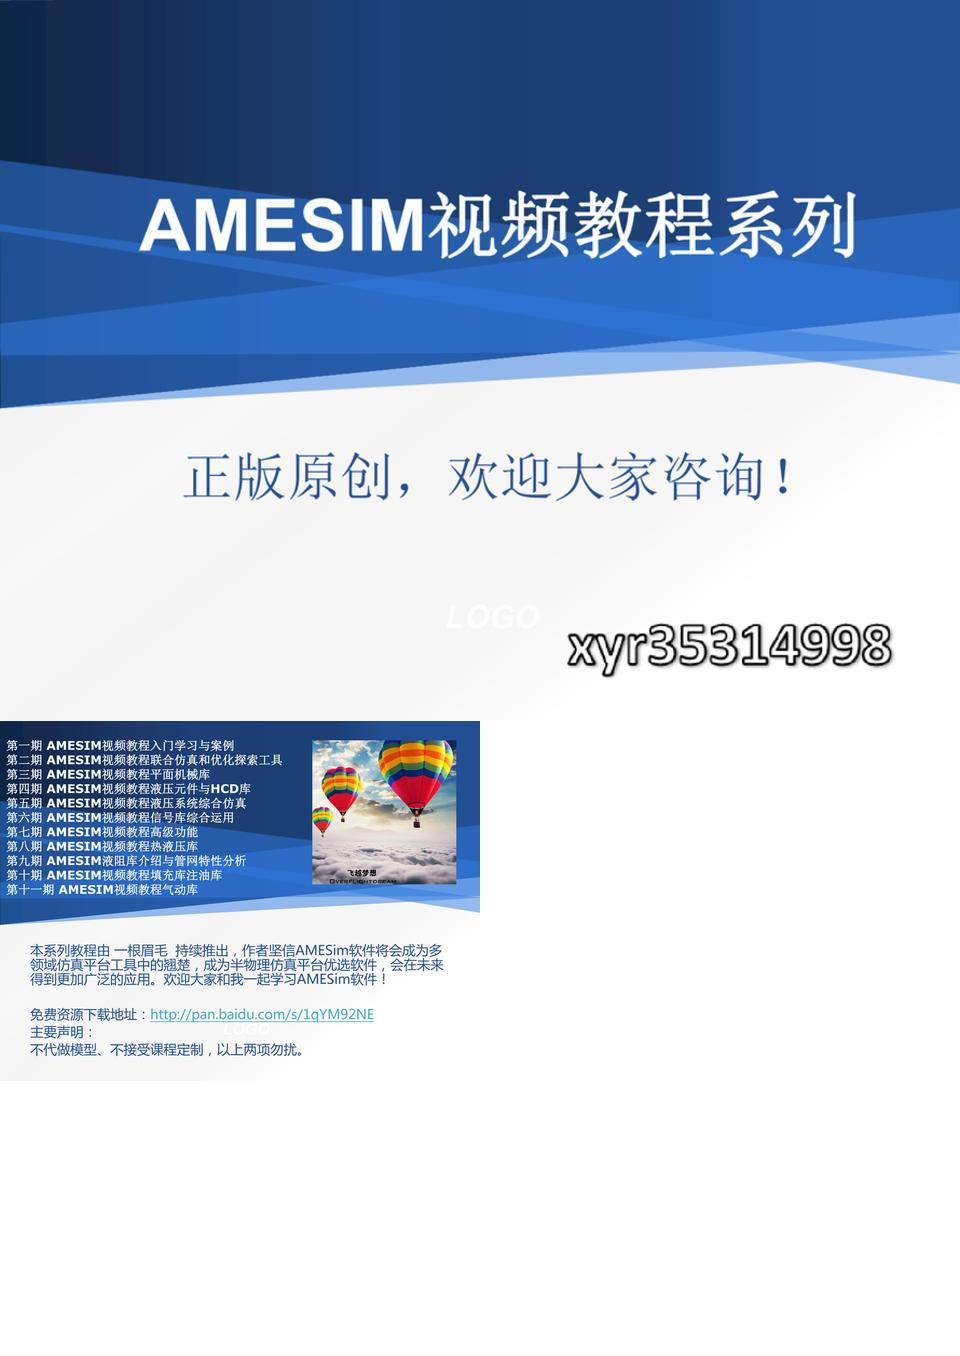 AMESIM视频教程清单及下载地址